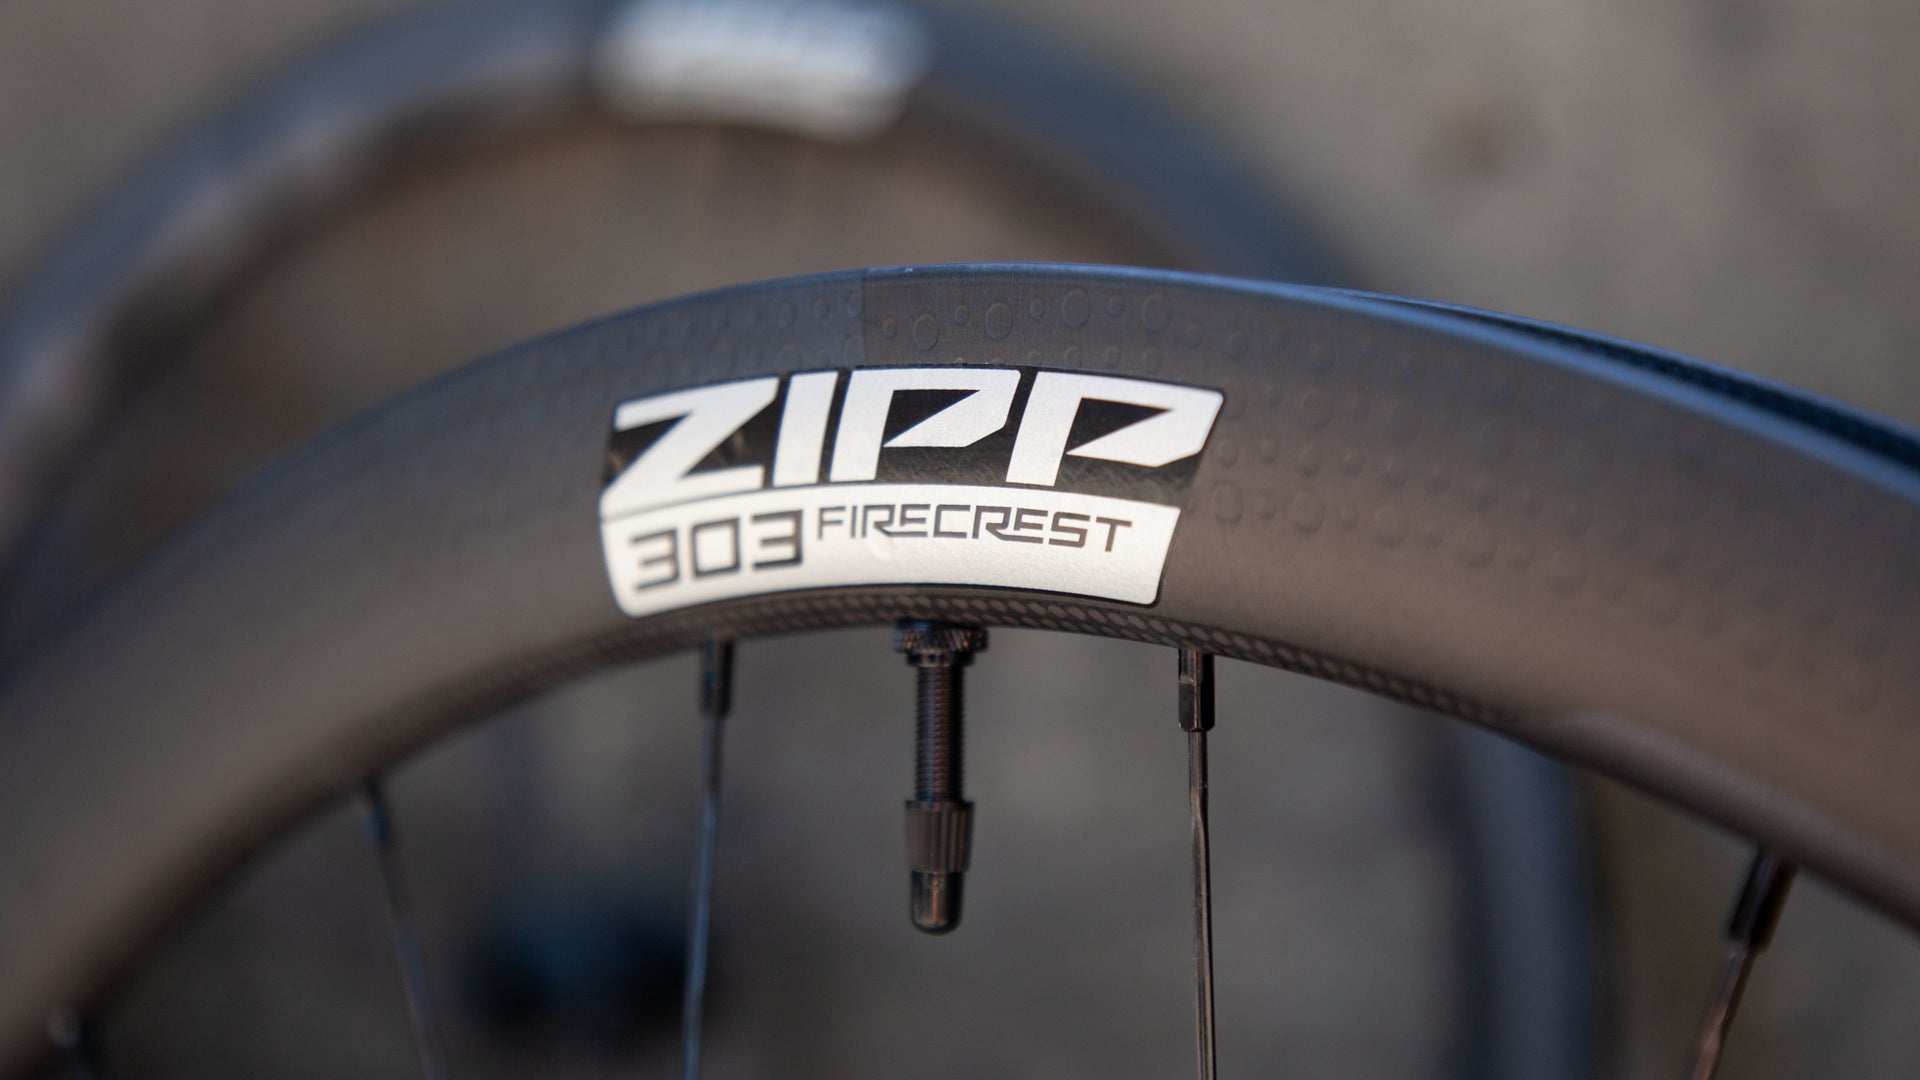 sram/zipp – Zipp 303 Firecrest 700c Tubeless Disc Brake Wheelset 